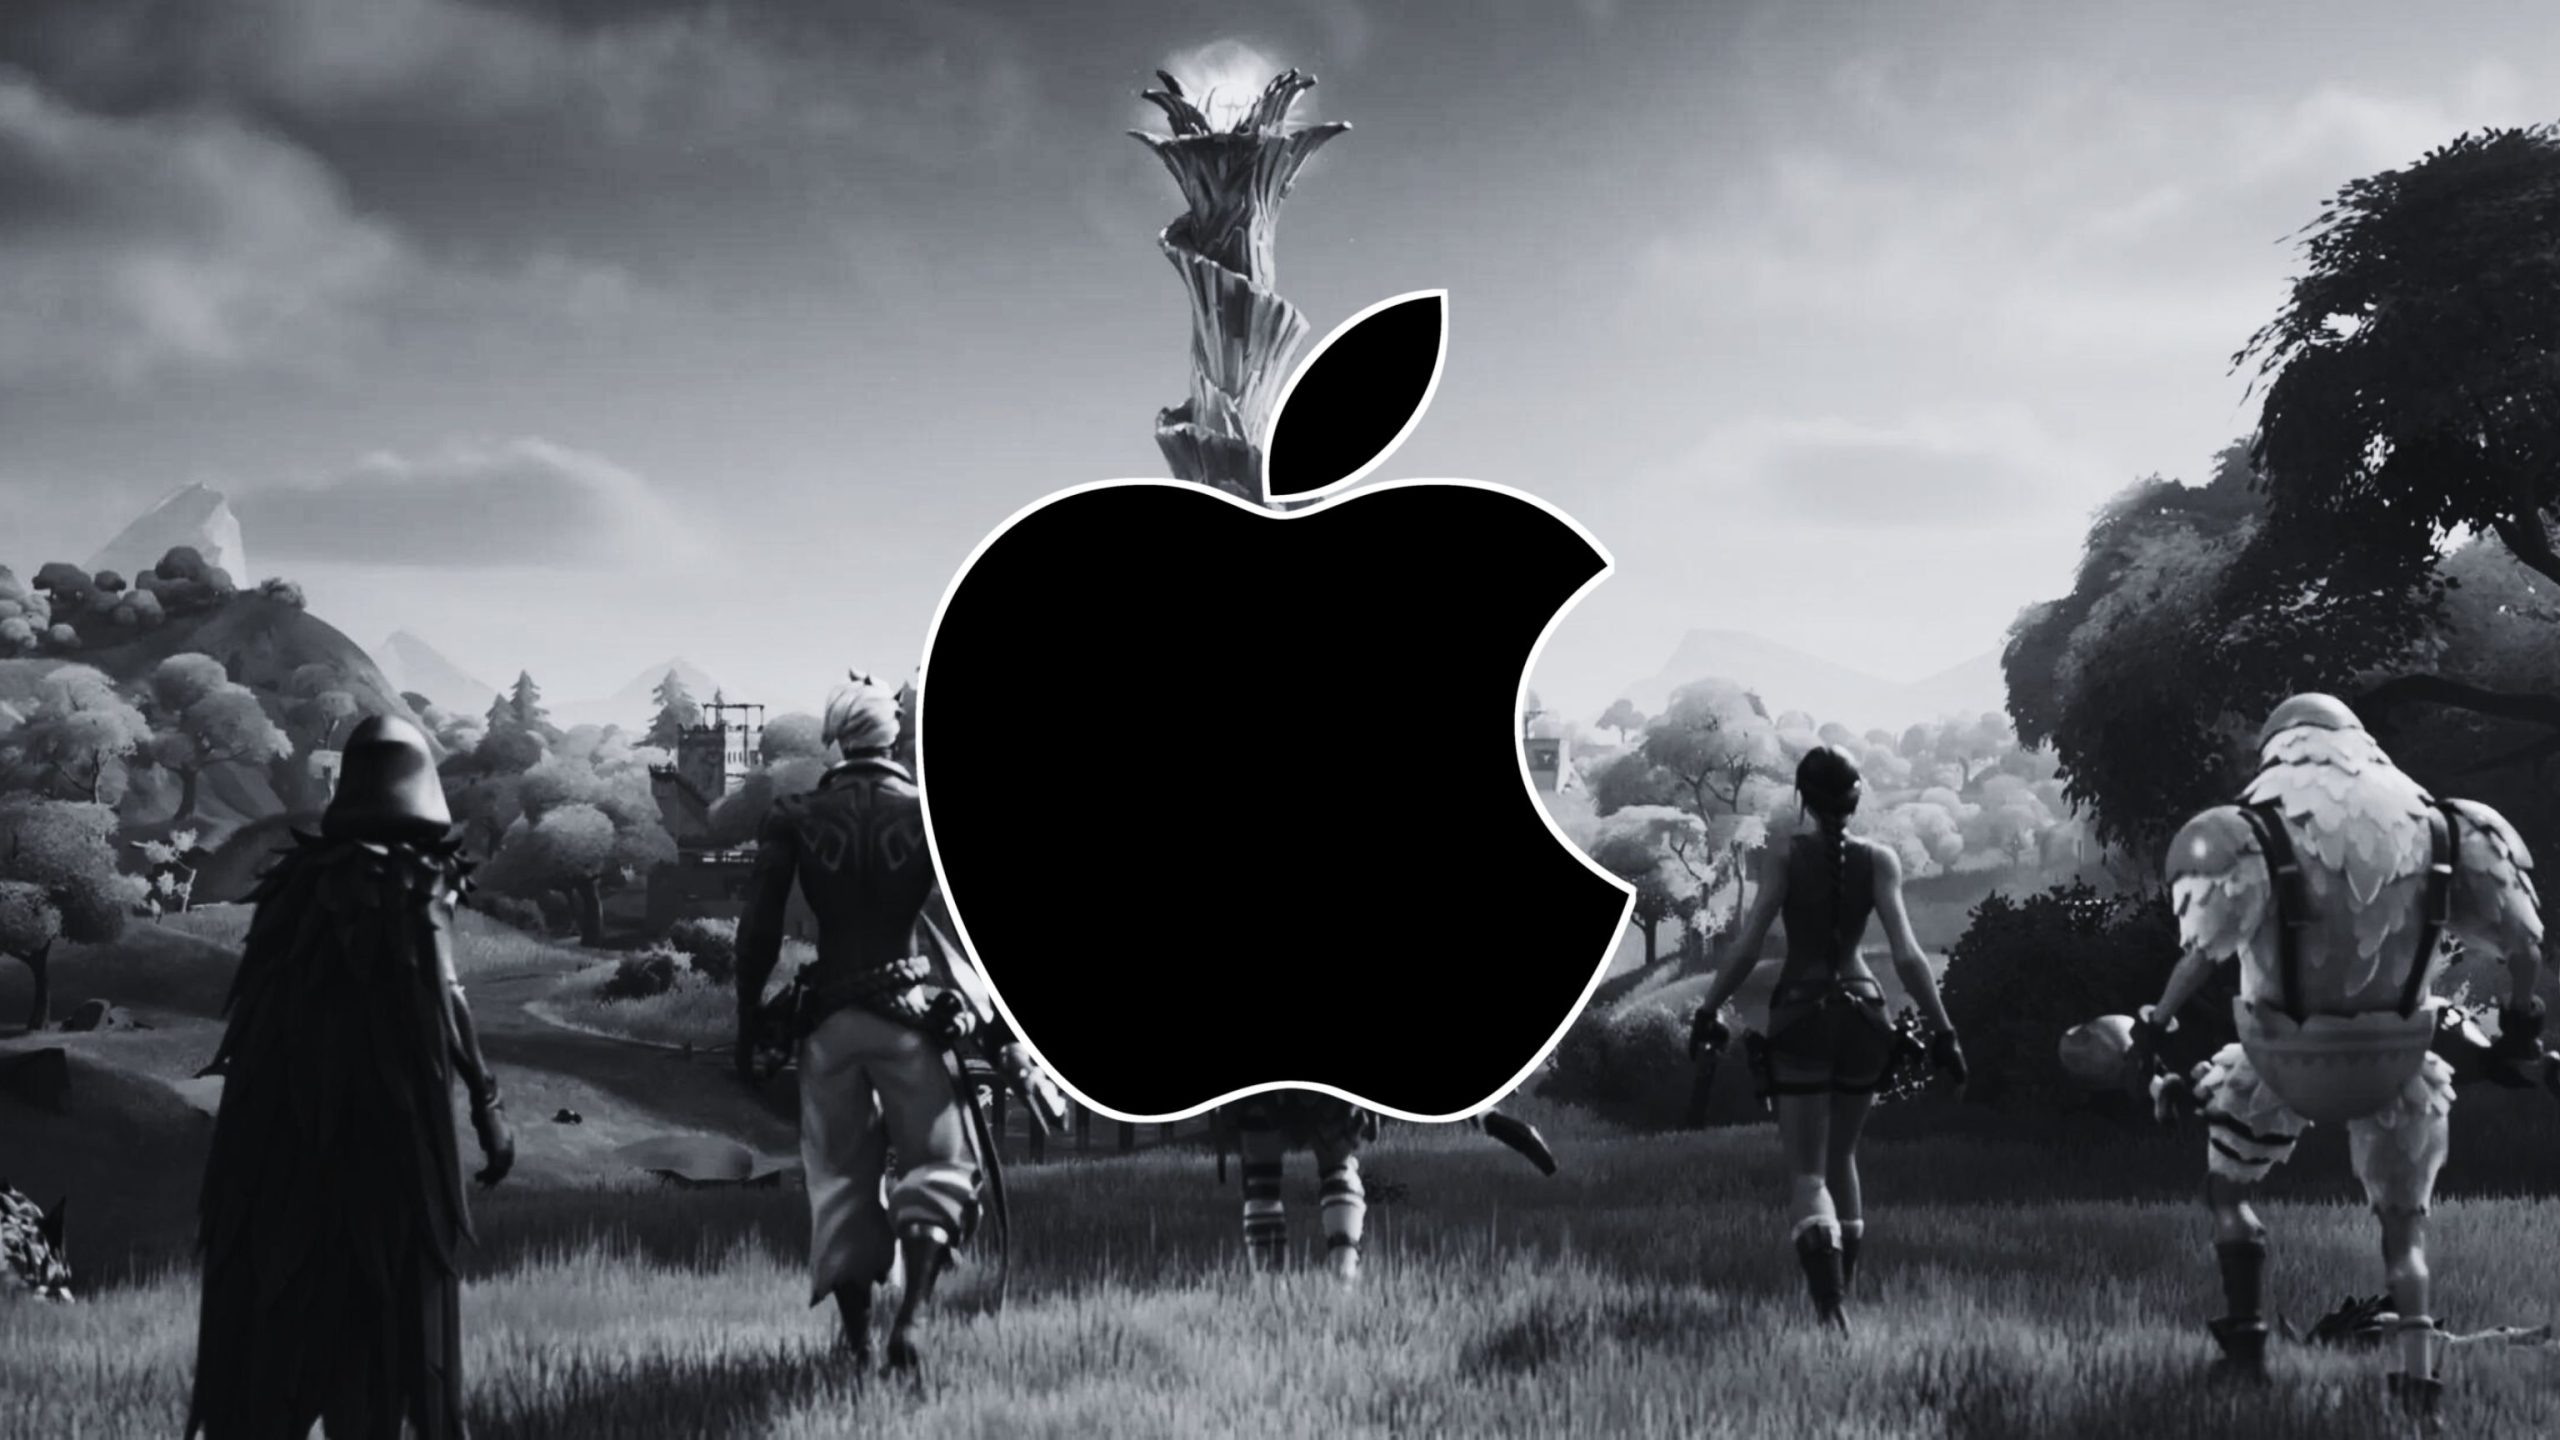 EU To Investigate Apple’s Retaliatory Ban of Epic Games’ Developer Account After Epic CEO Publicly Criticized Apple’s “Monopolistic” Tactics